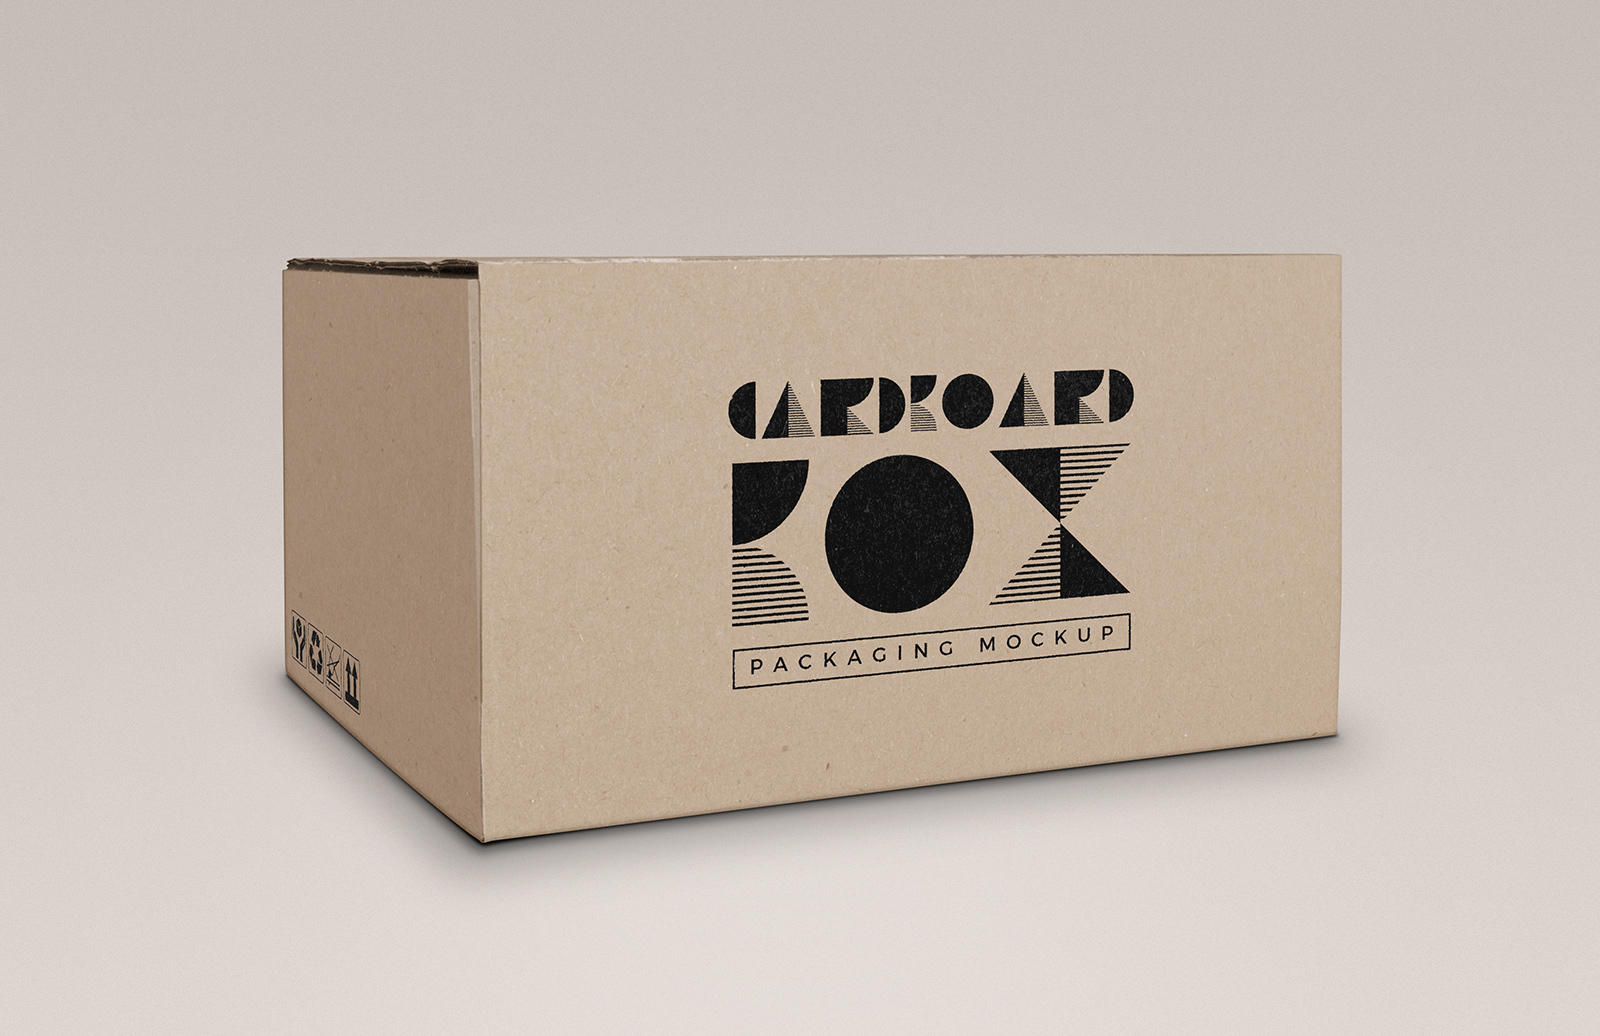 Download Cardboard Box Packaging Mockup Medialoot